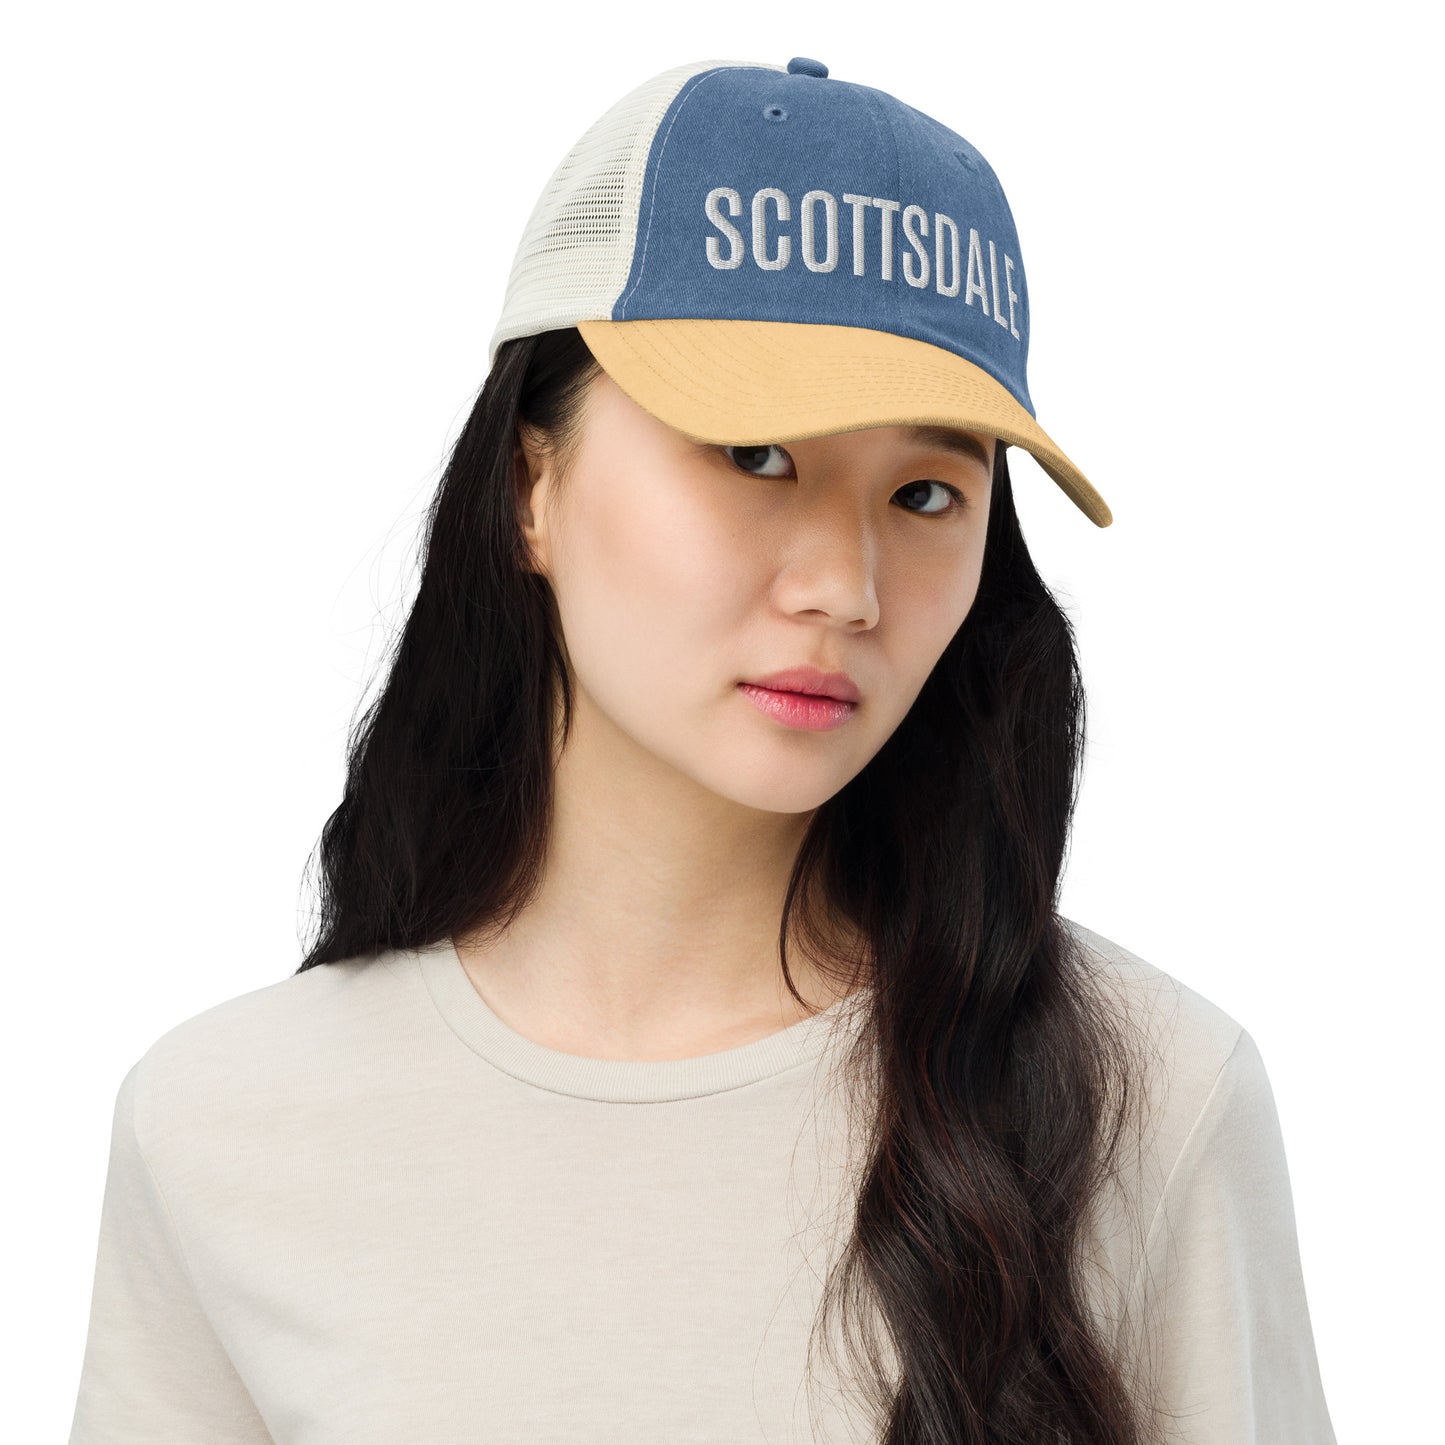 Scottsdale Pigment-dyed cap